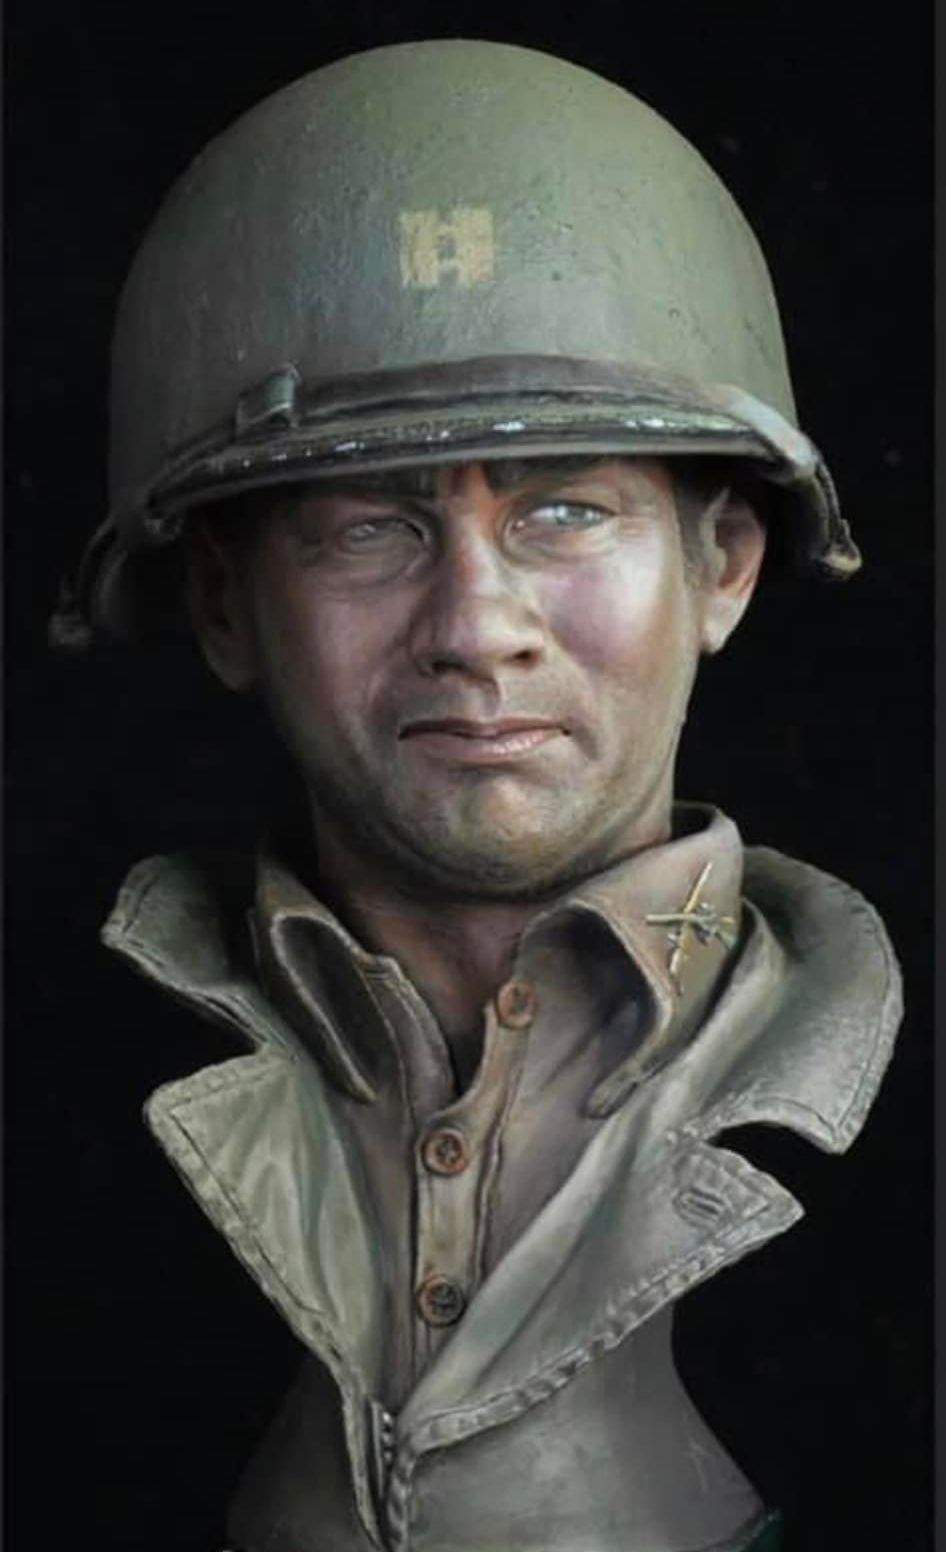 DTMMB001 - US OFFICER 2°RANGER NORMANDIA 1944 - Scale 1:6